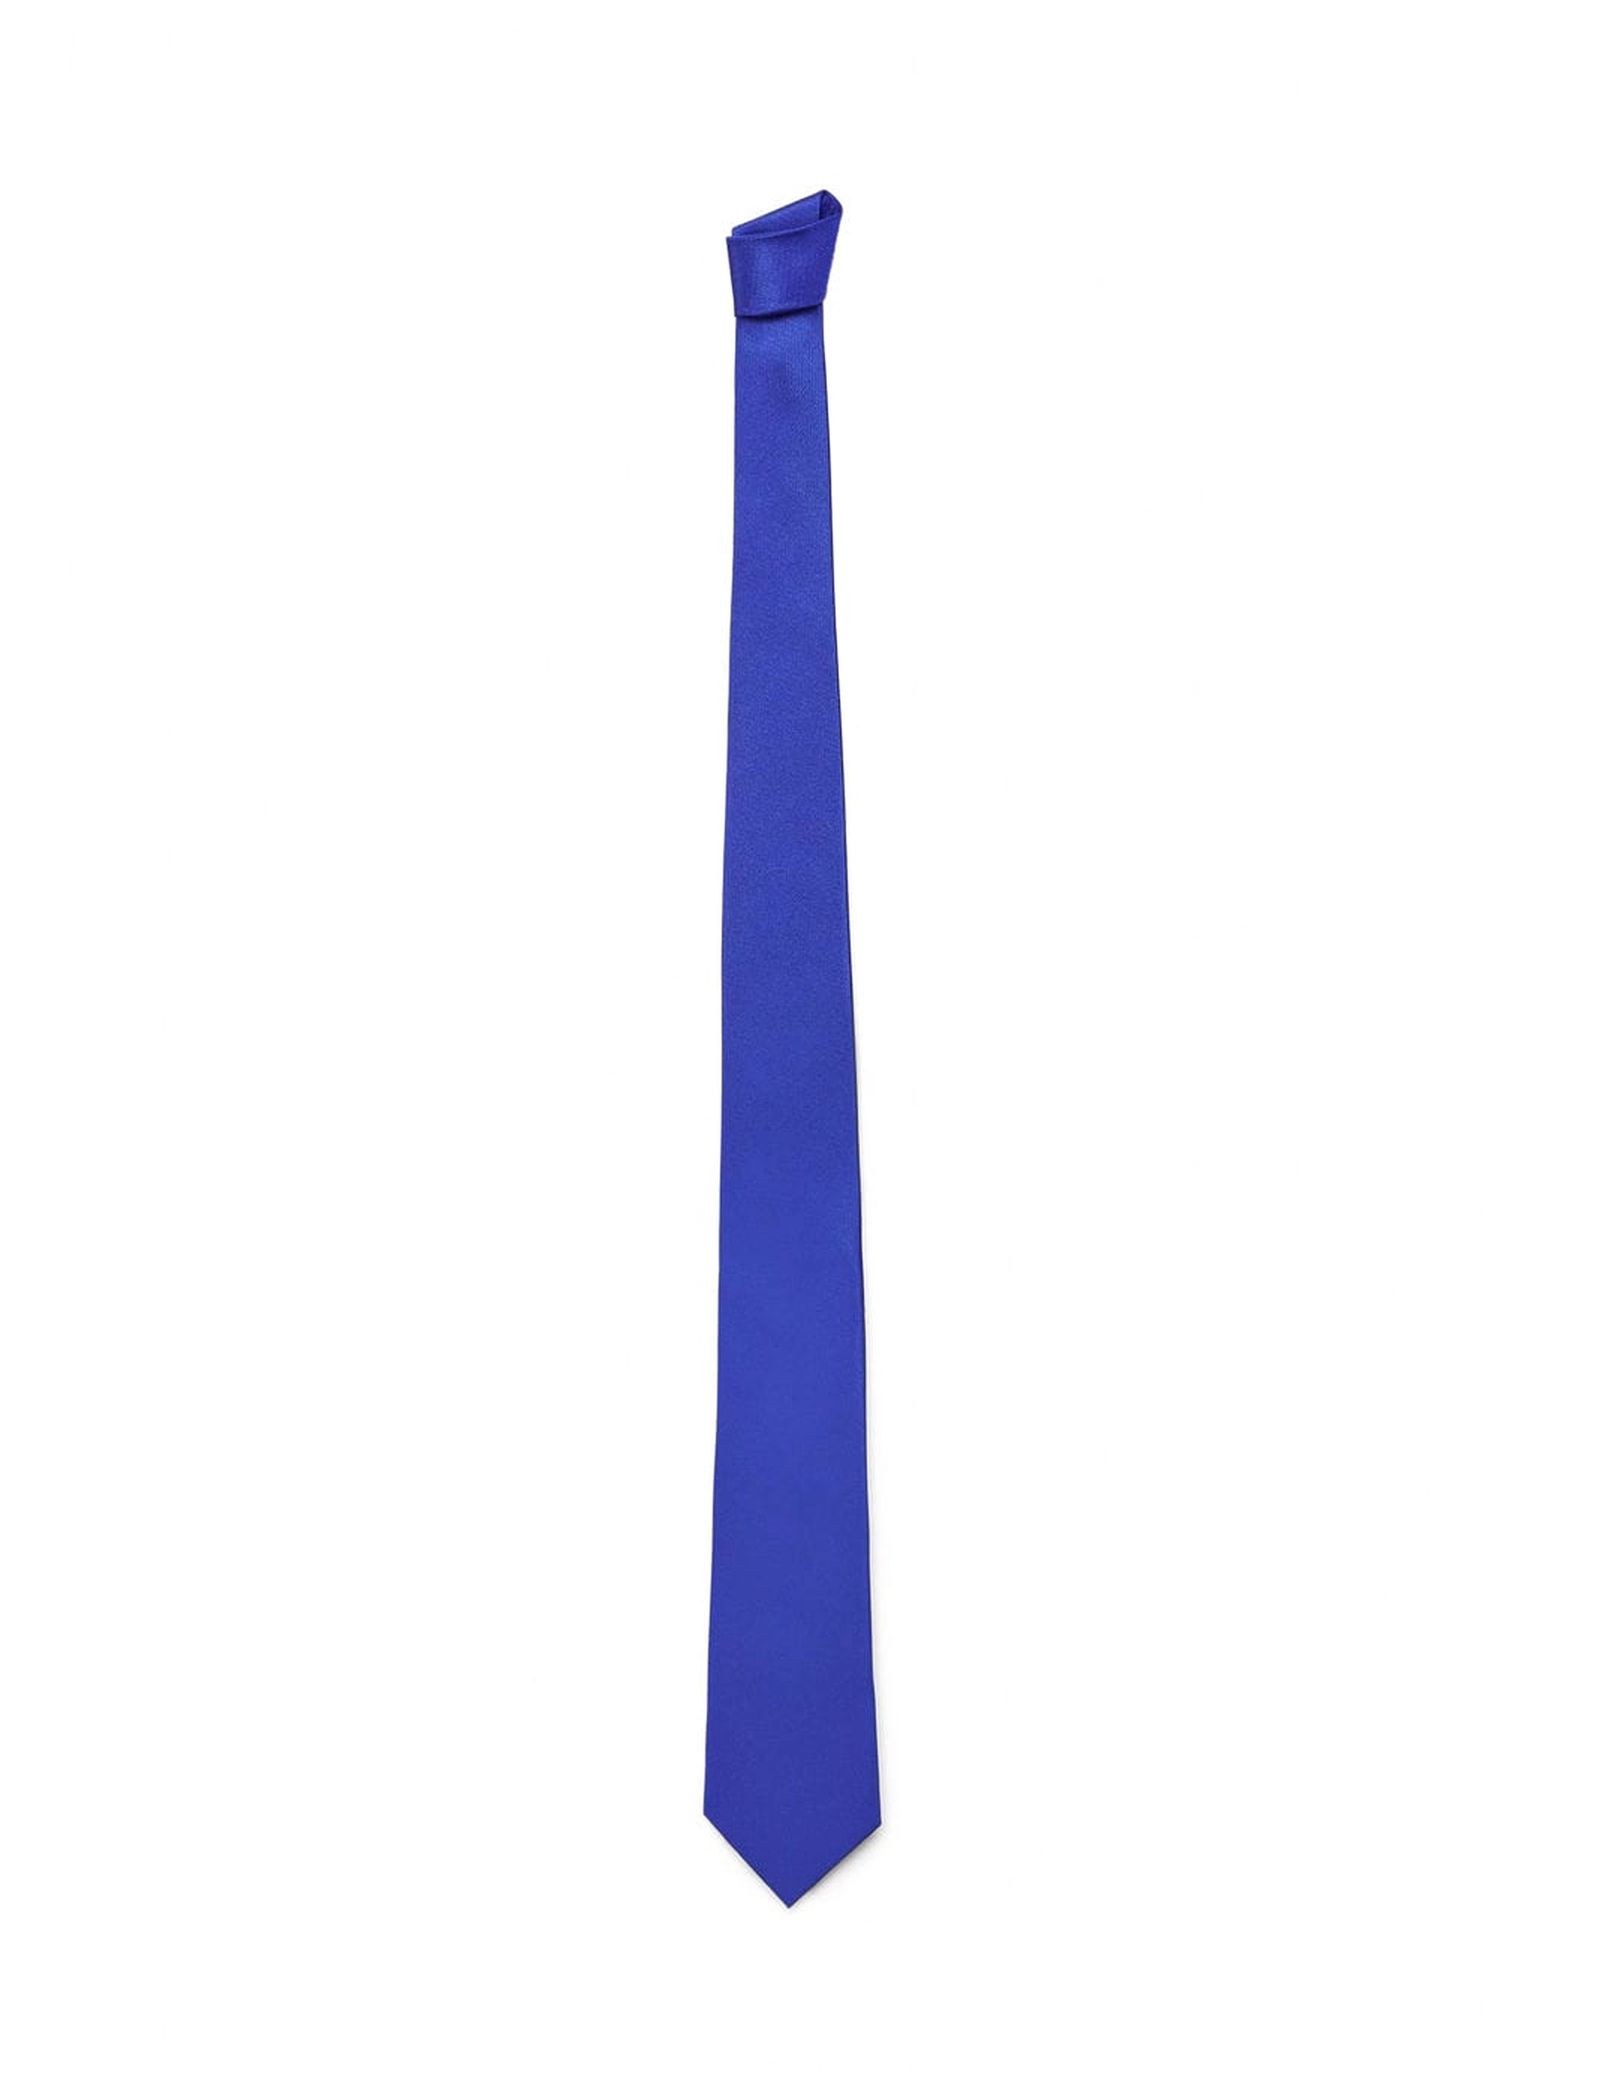 کراوات مانگو مدل 23070660 تک سایز - آبي - 2